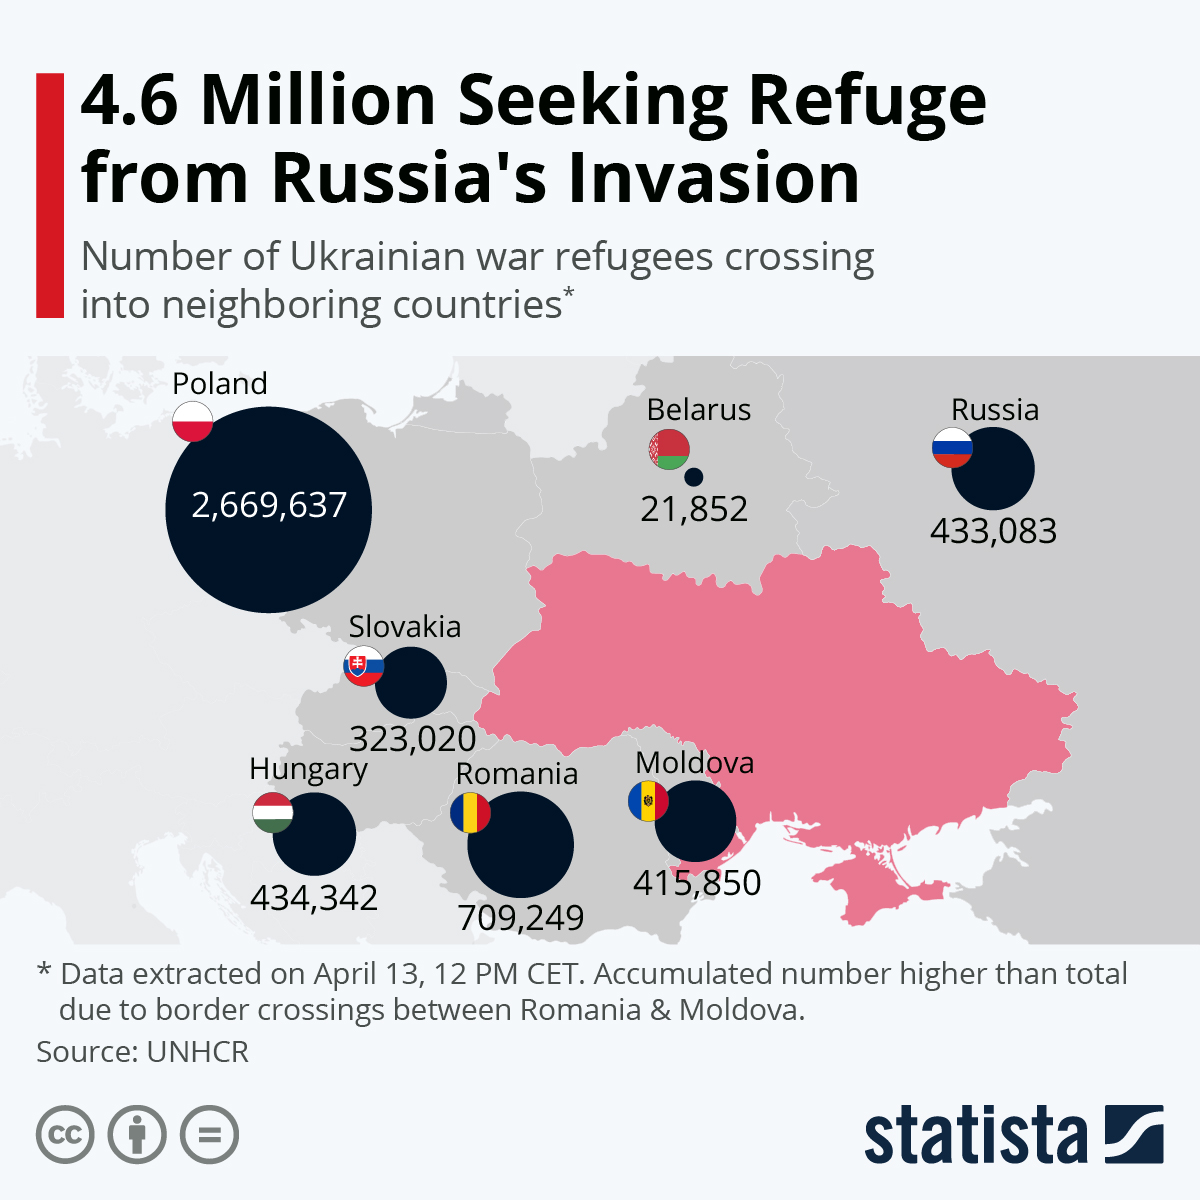 4.6 Million Seeking Refuge from Russian Invasion